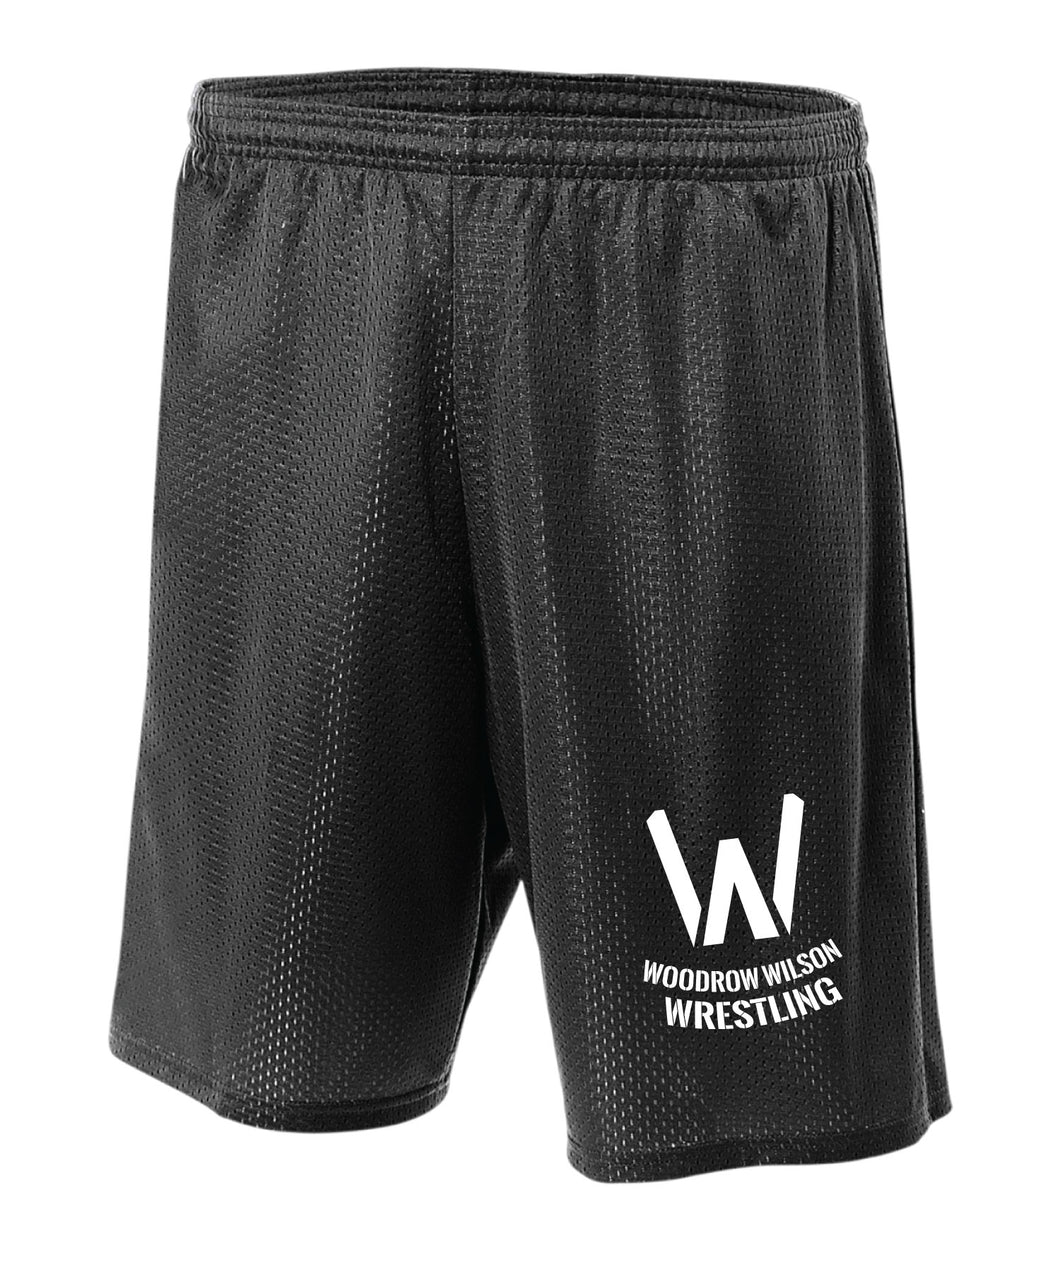 Woodrow Wilson Tech Shorts - 5KounT